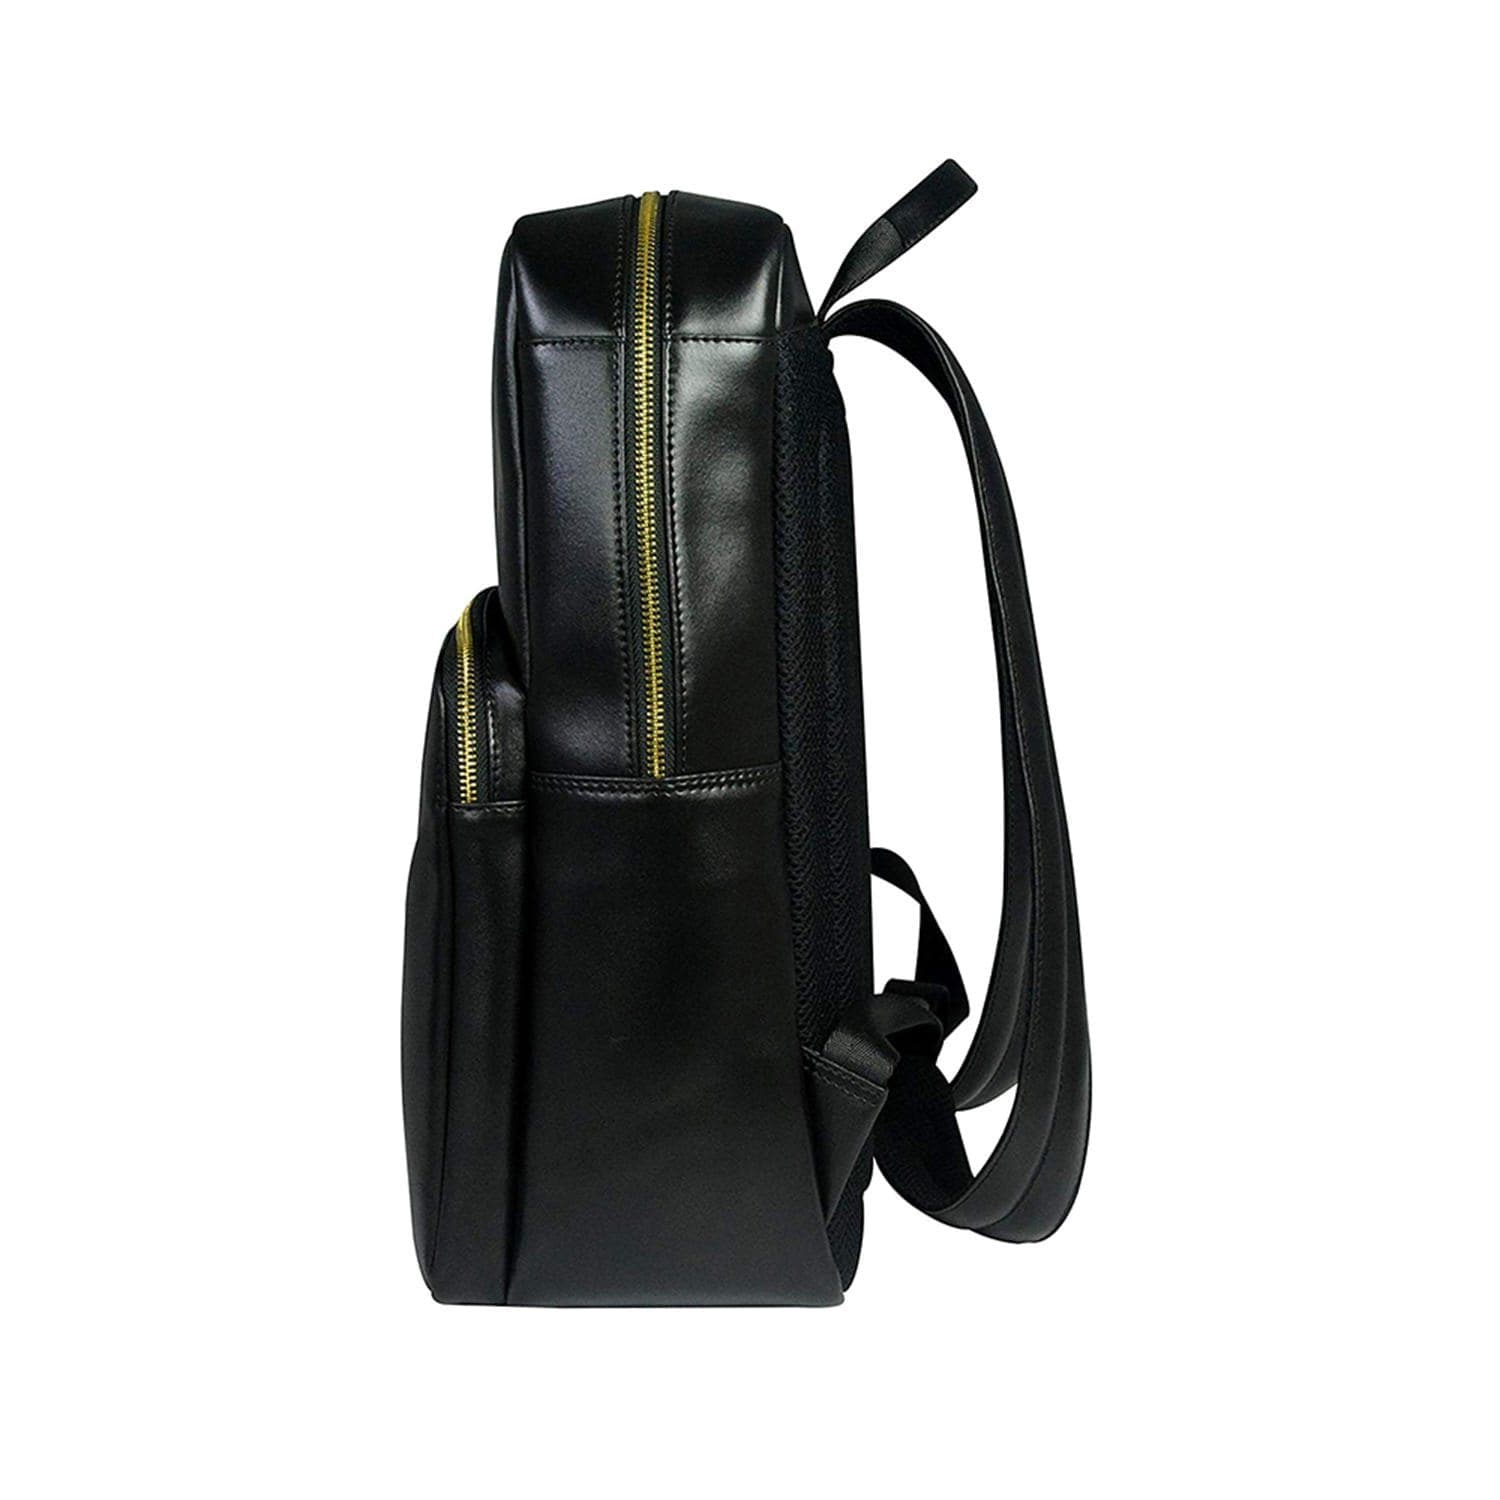 Cross Concordia Fashion Backpack for Men - Black - AC1101272-1-1 - Jashanmal Home